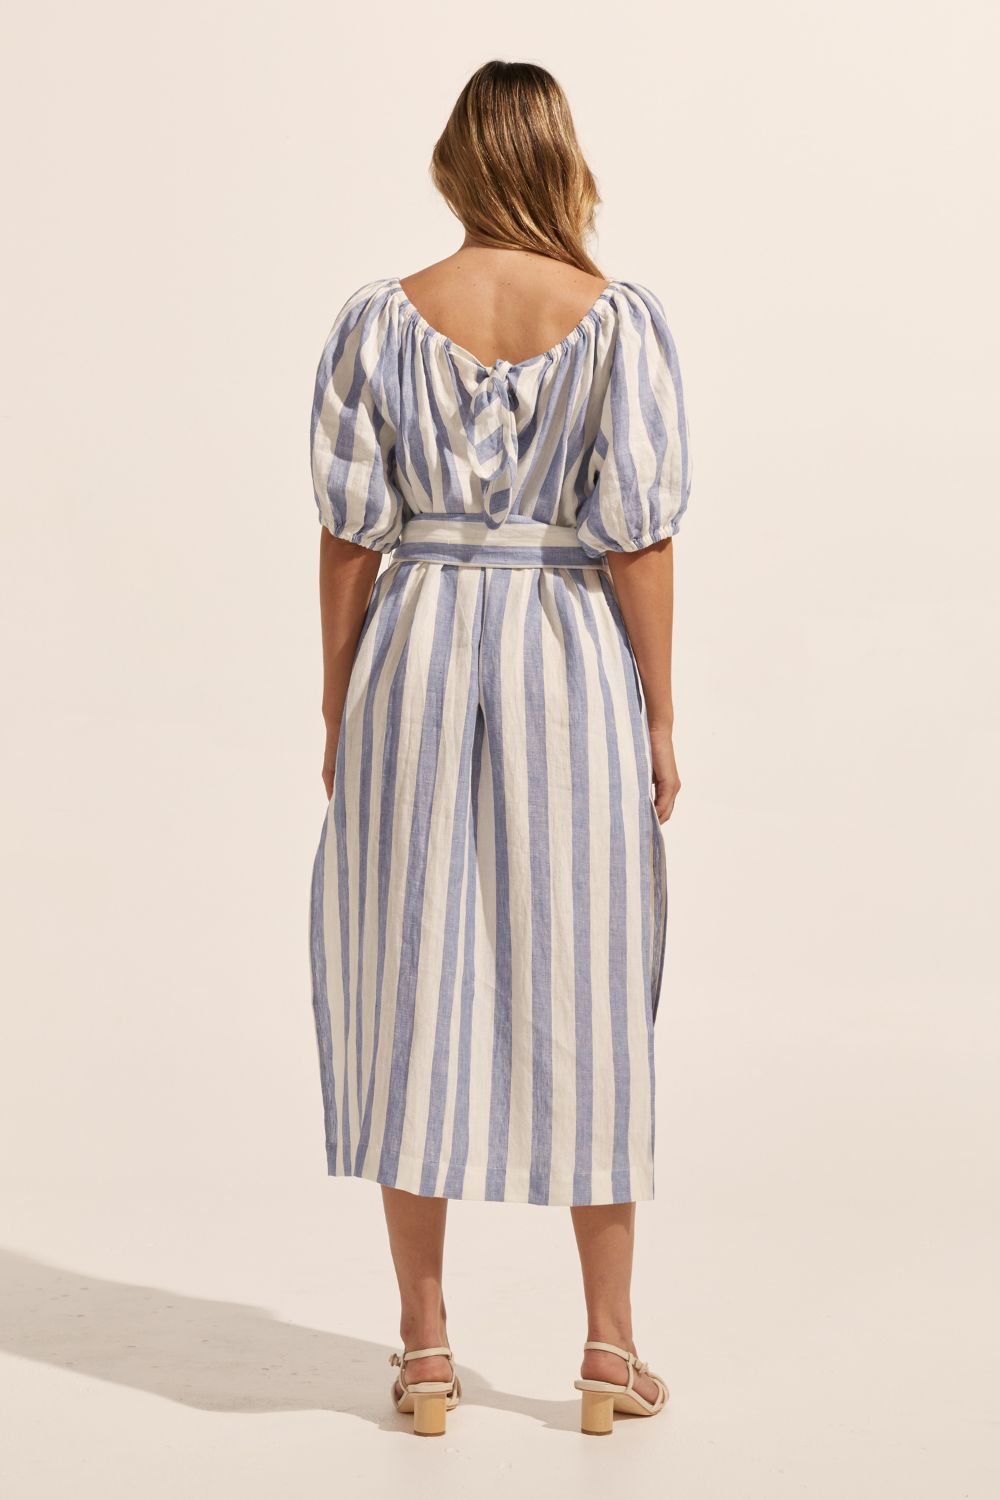 blue and white stripe, midi dress, self tie fabric belt, side splits, back image, elasticated neckline